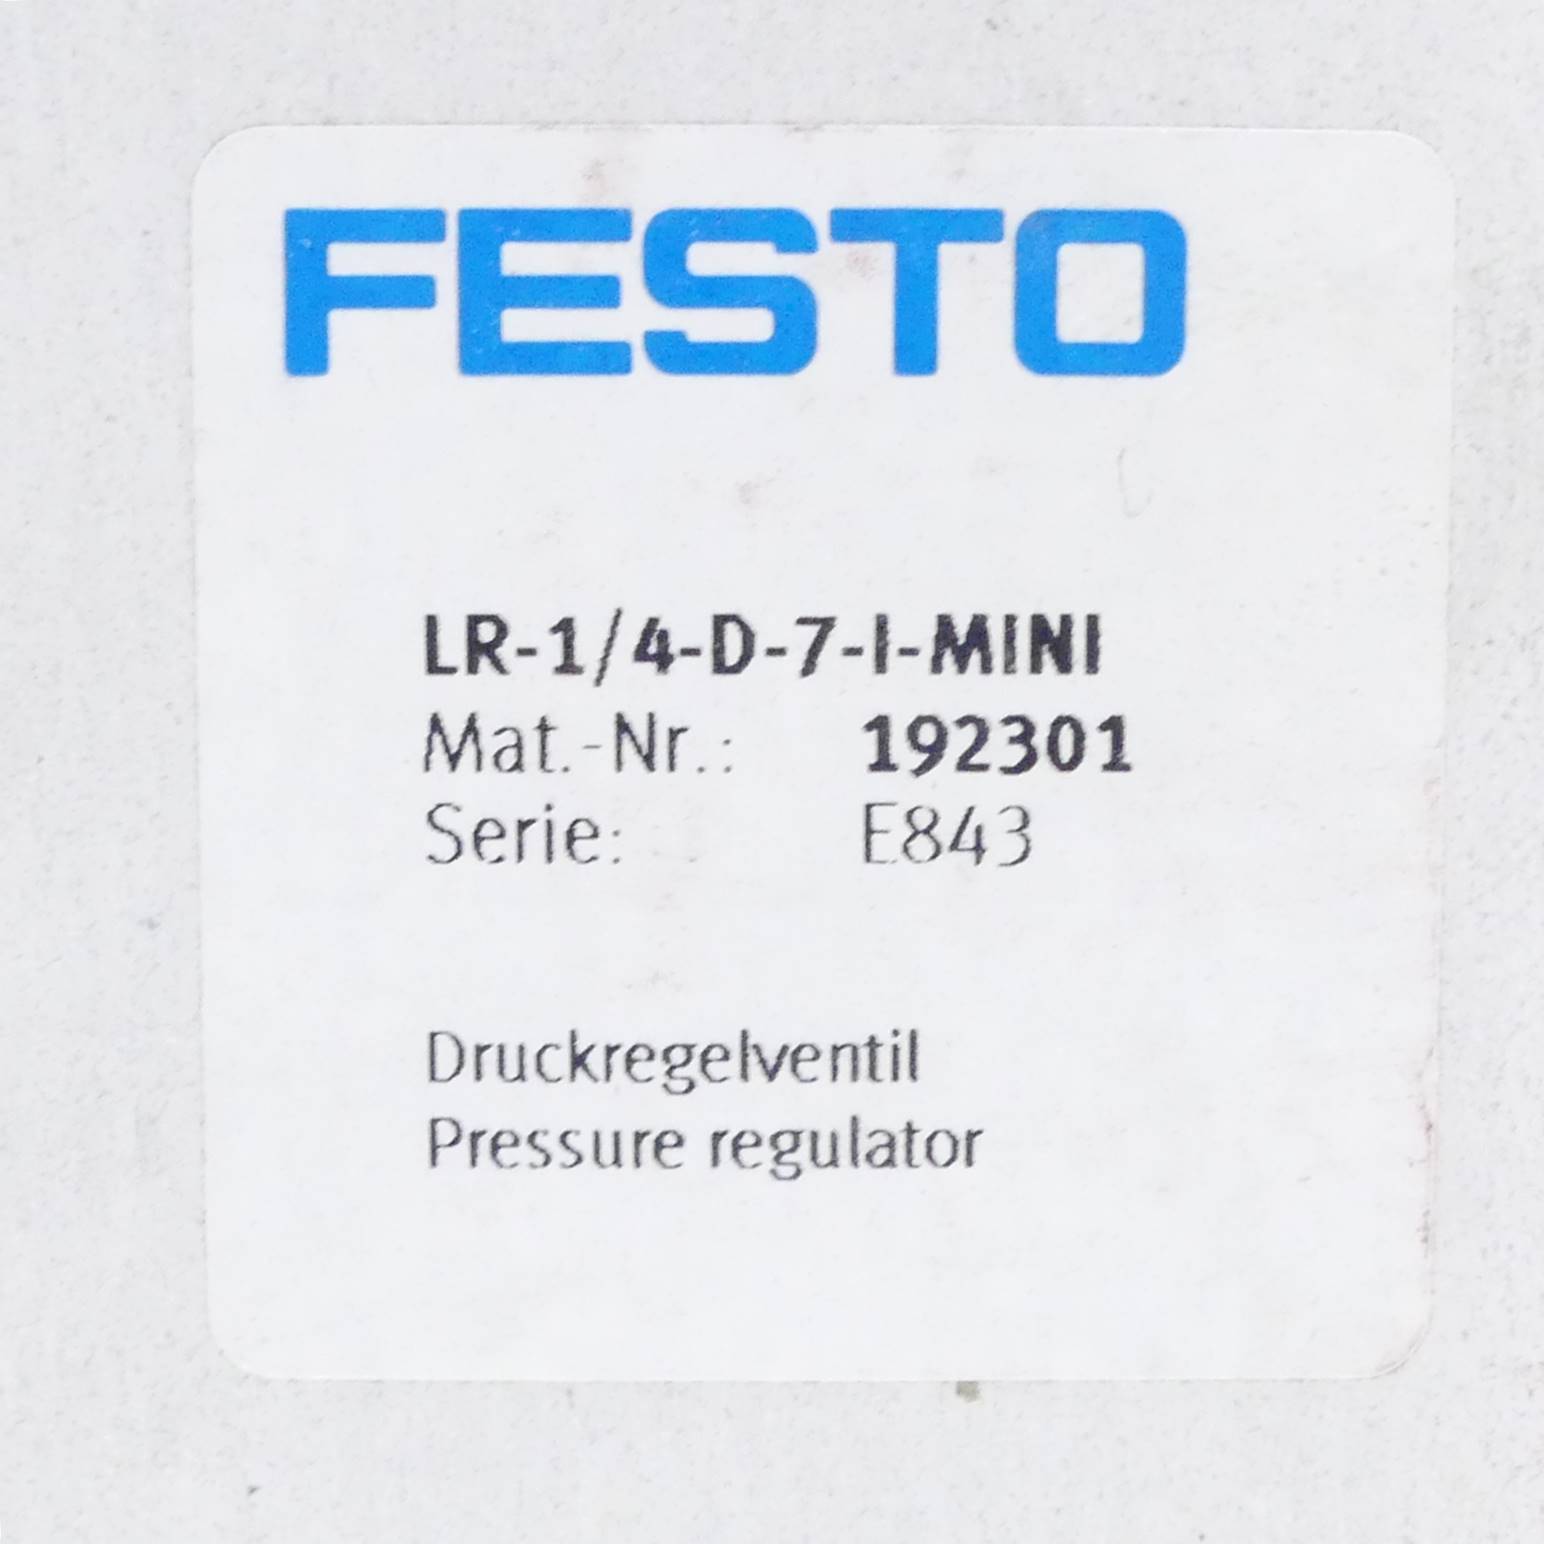 Pressure regulator LR-1/4-D-7-I-MINI 